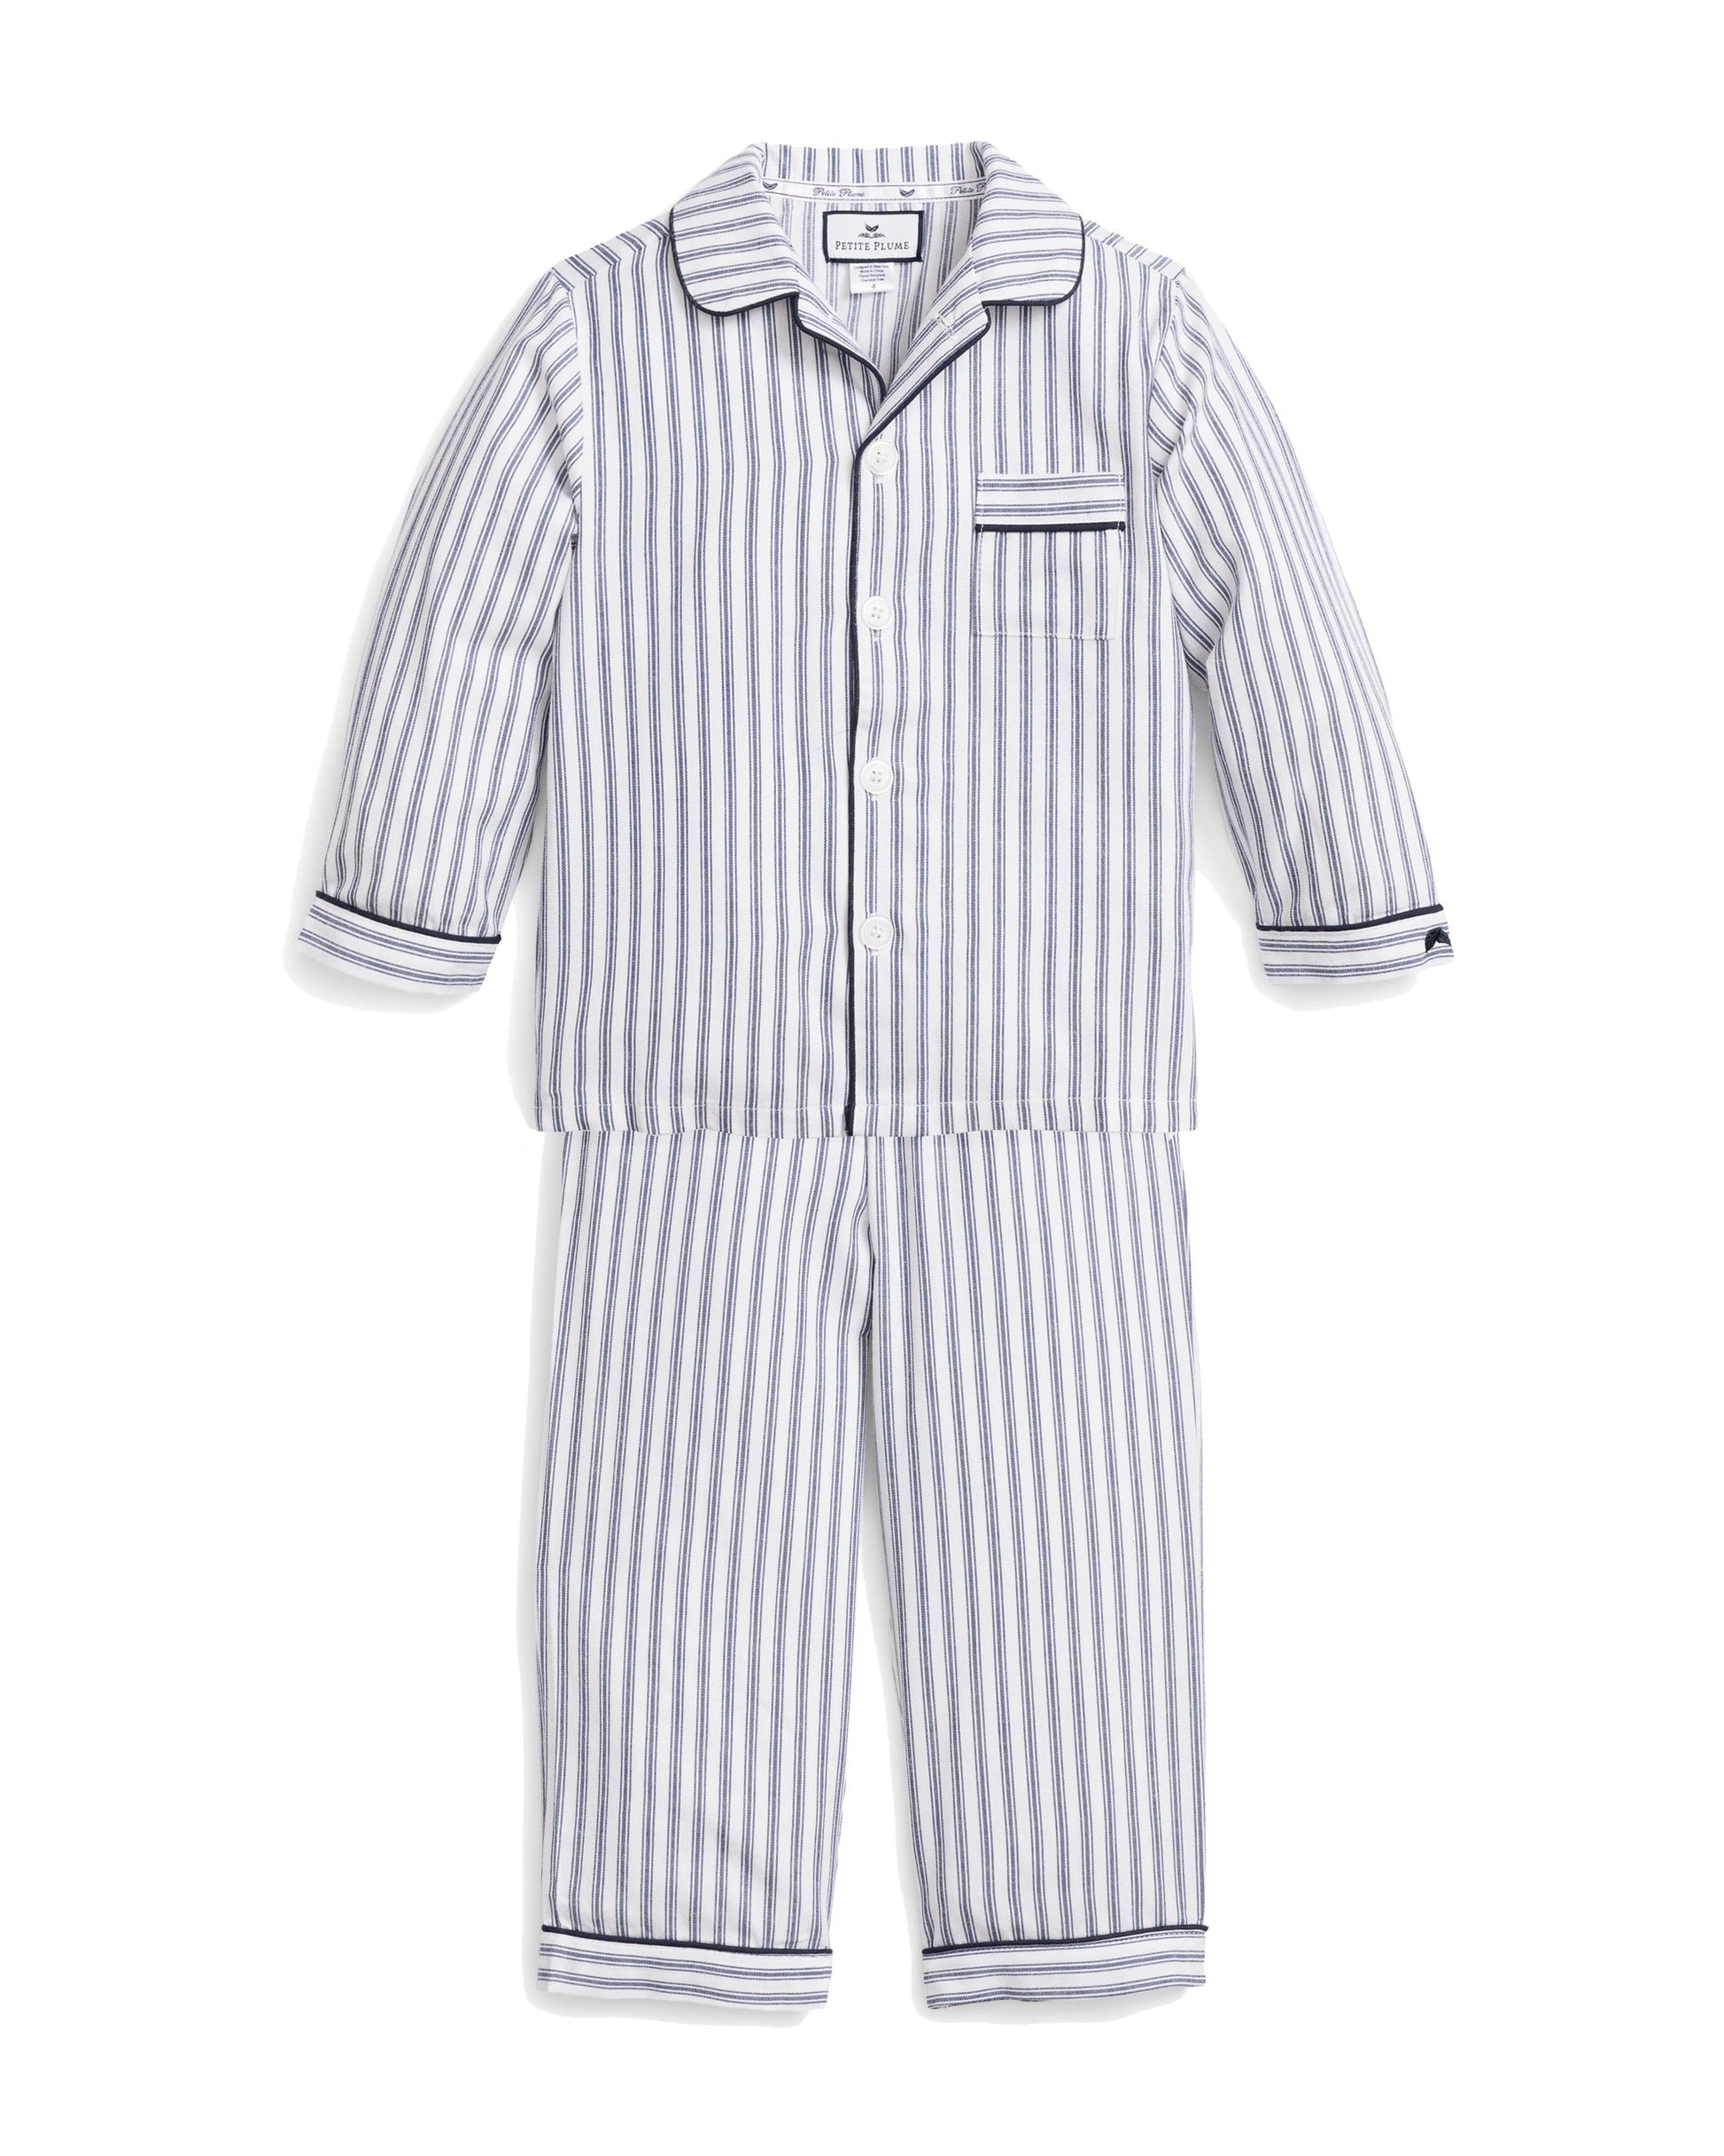 Petite Plume Navy French Ticking Pajama Set